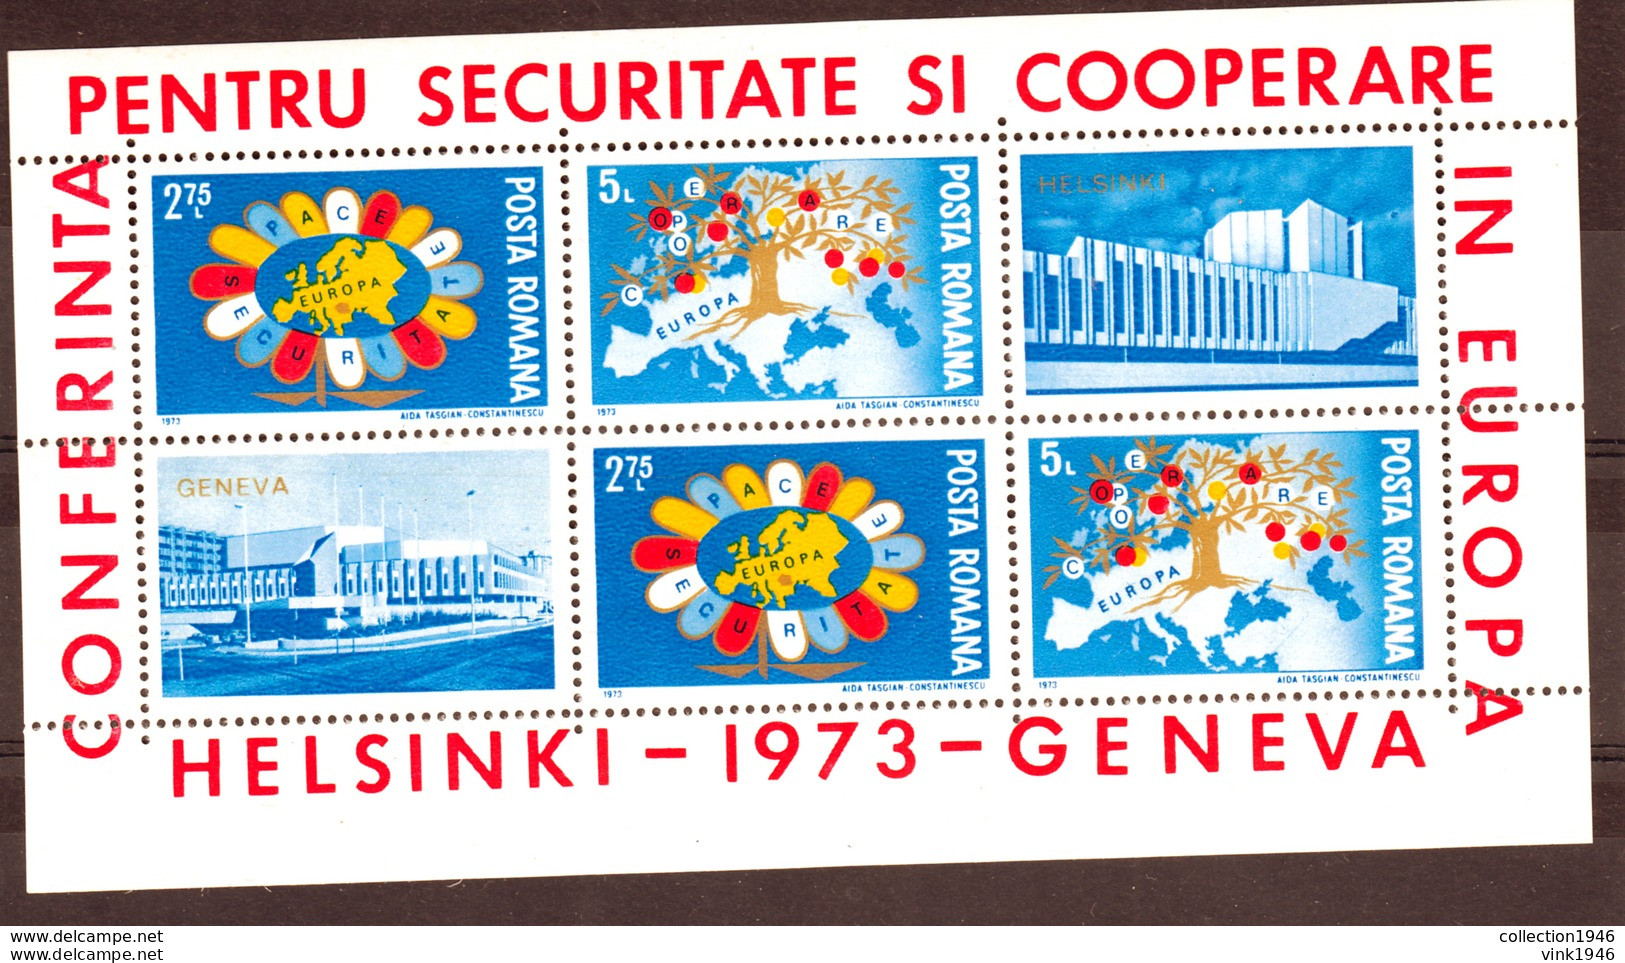 Europa 1962-1980,980V+17 blocks on 125 cards,Europa,Cept,nice collection,schöne sammlung,MNH/Postfris(C182)